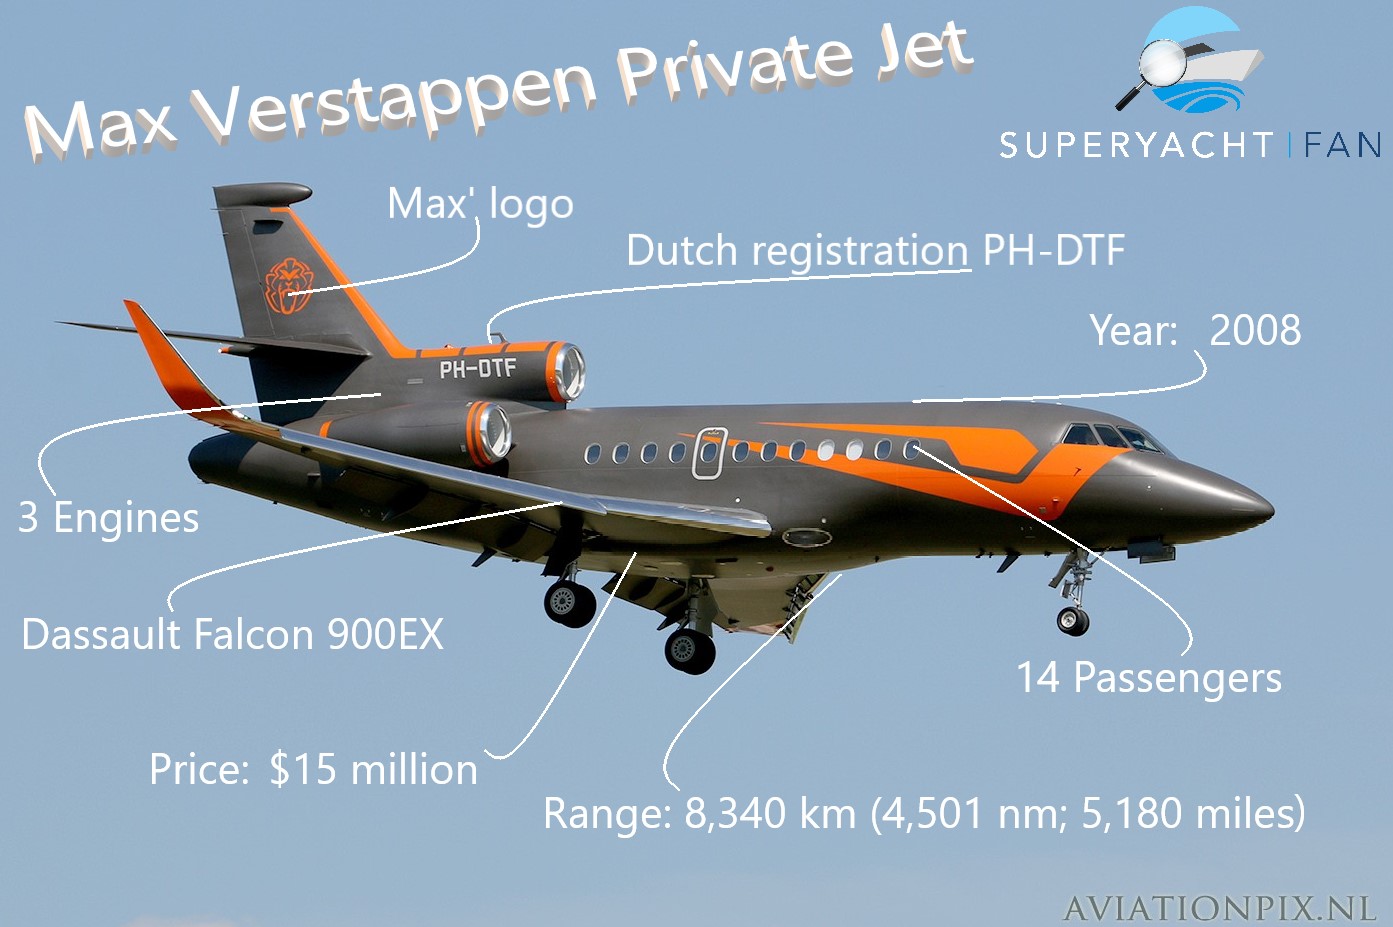 Max Verstappen Private Jet